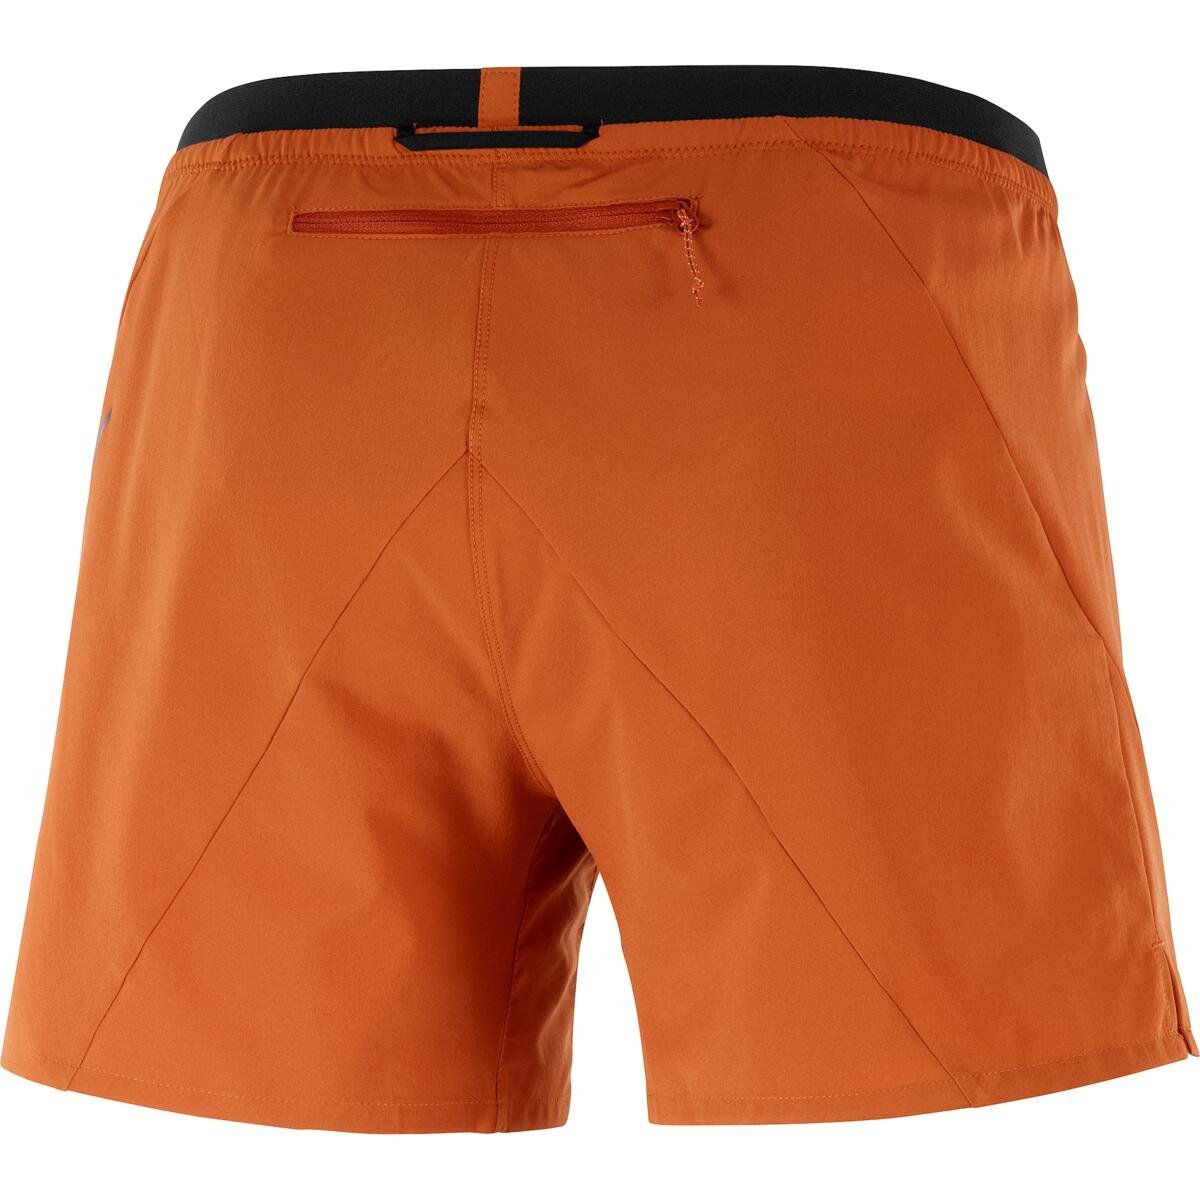 Šortky Salomon Cross 5'' Shorts M - oranžová